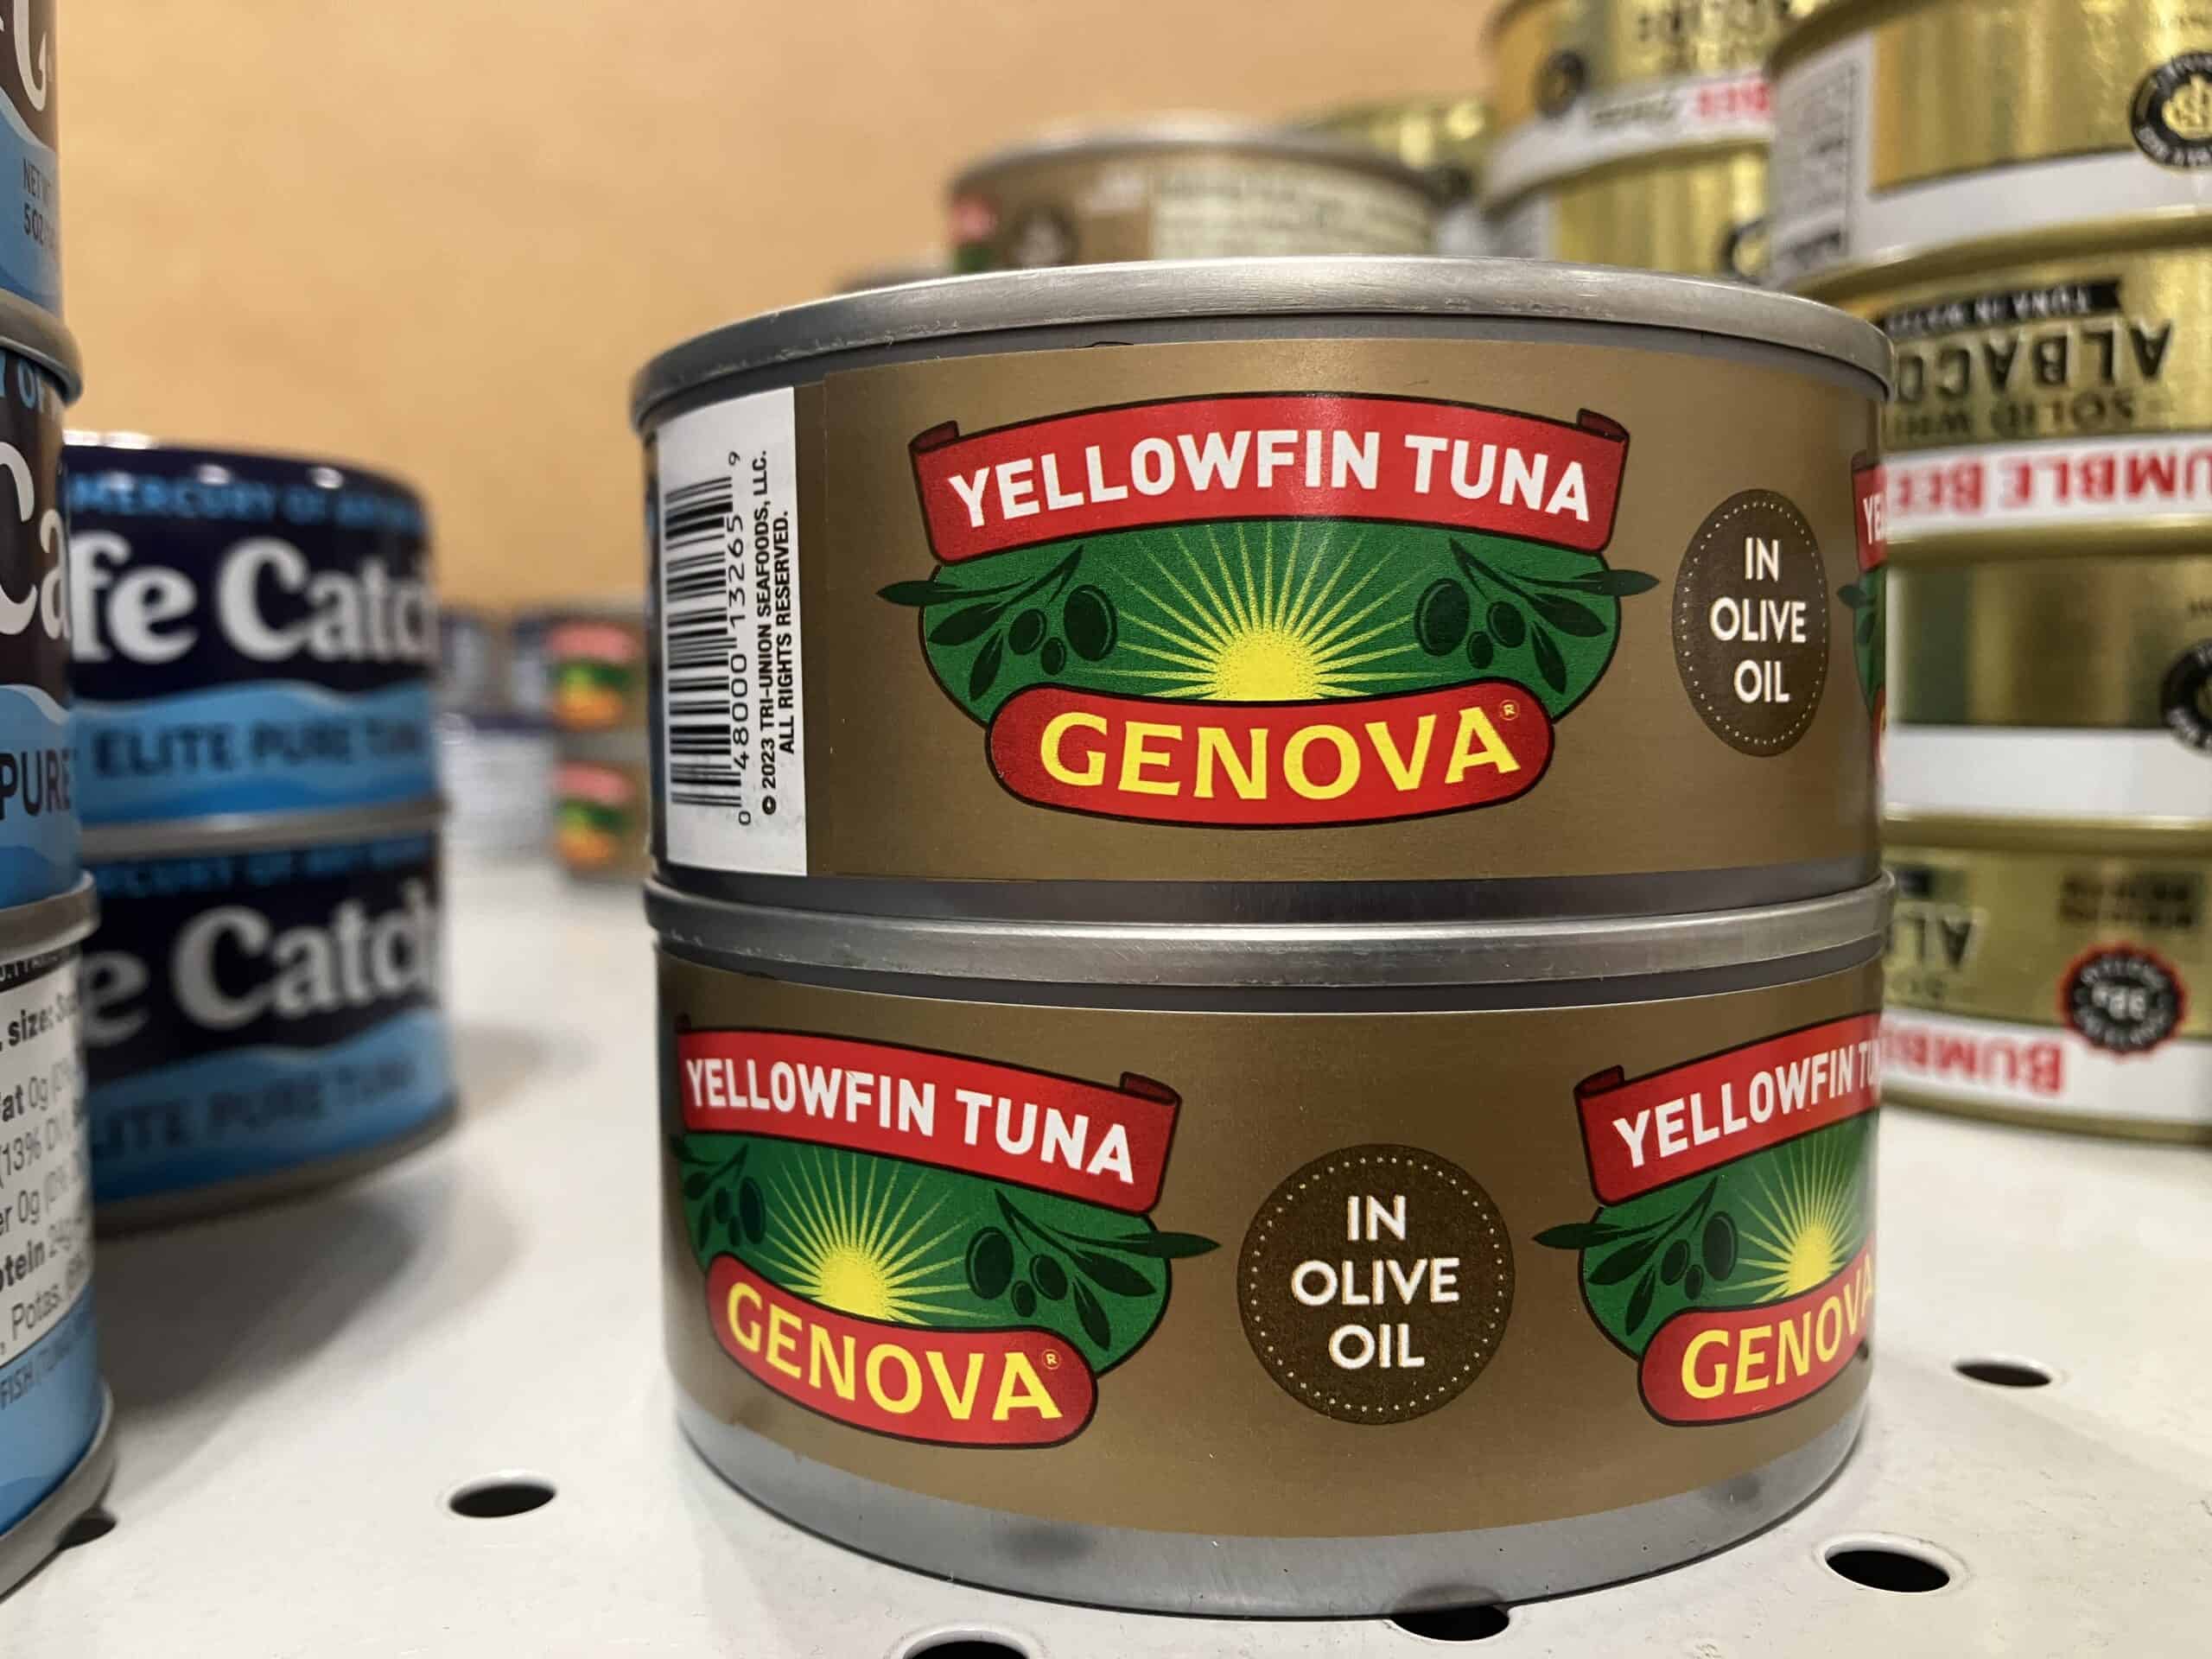 Genova yellowfin tuna